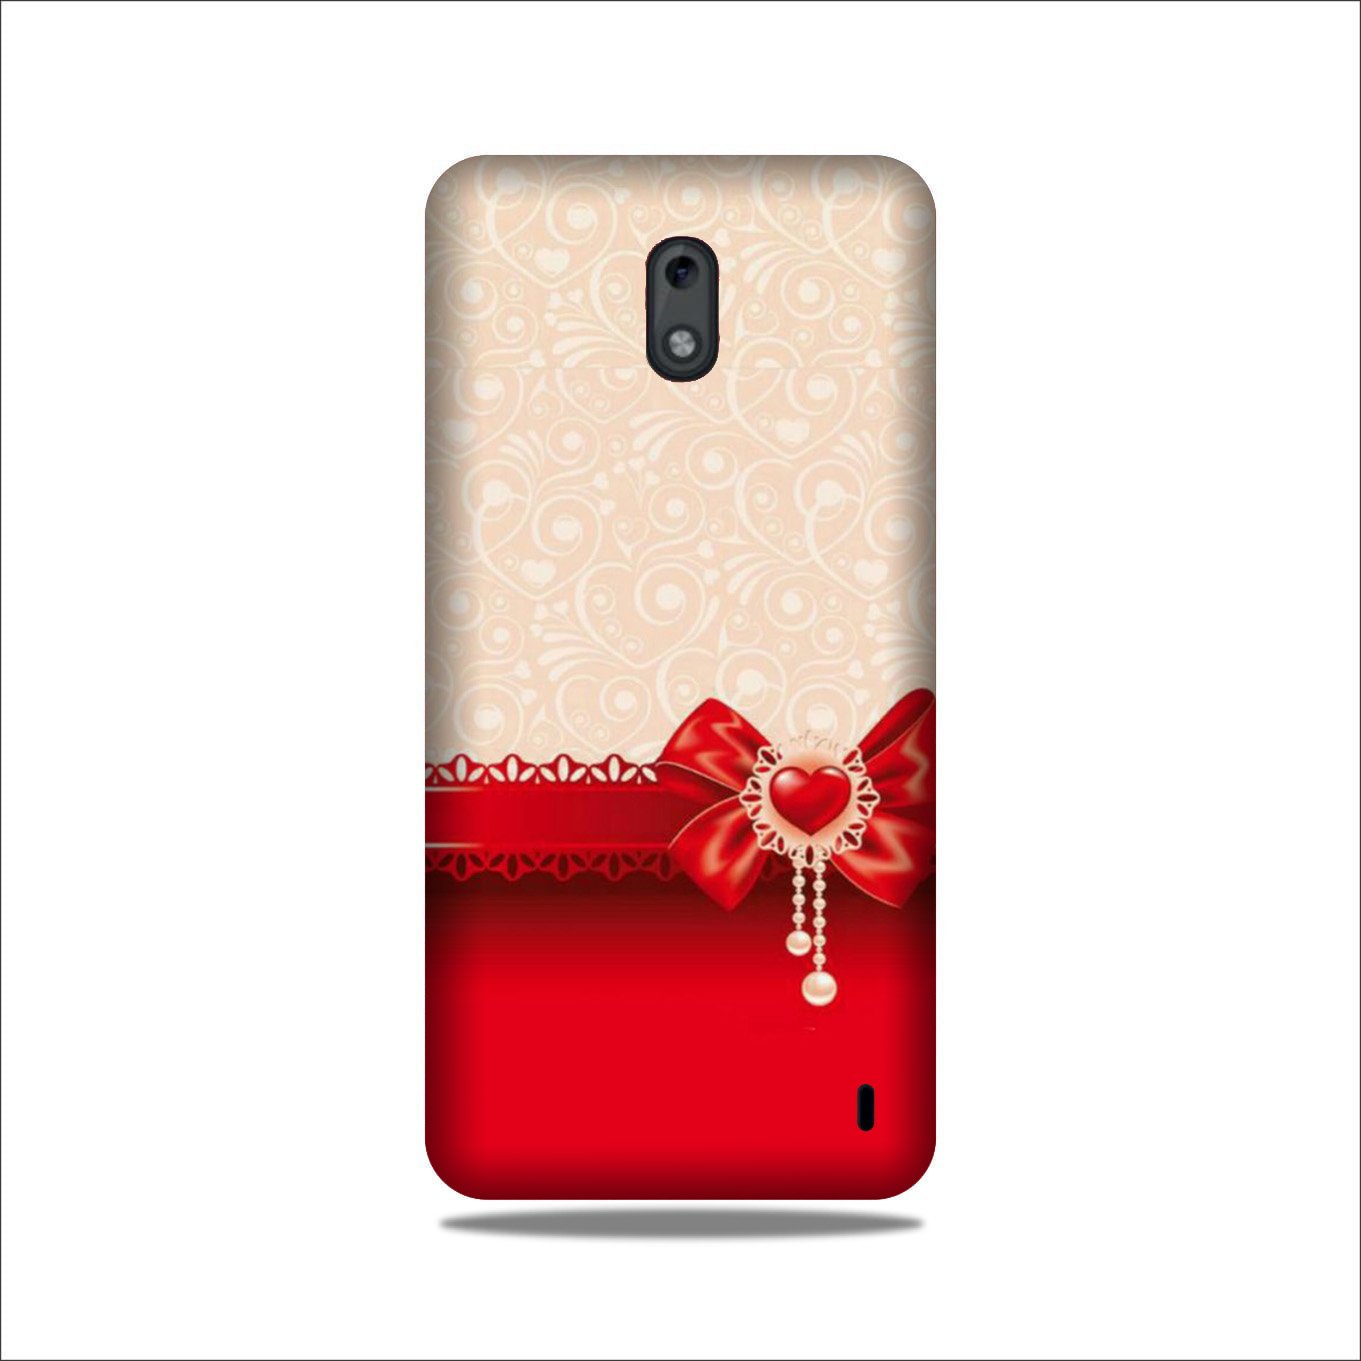 Gift Wrap3 Case for Nokia 3